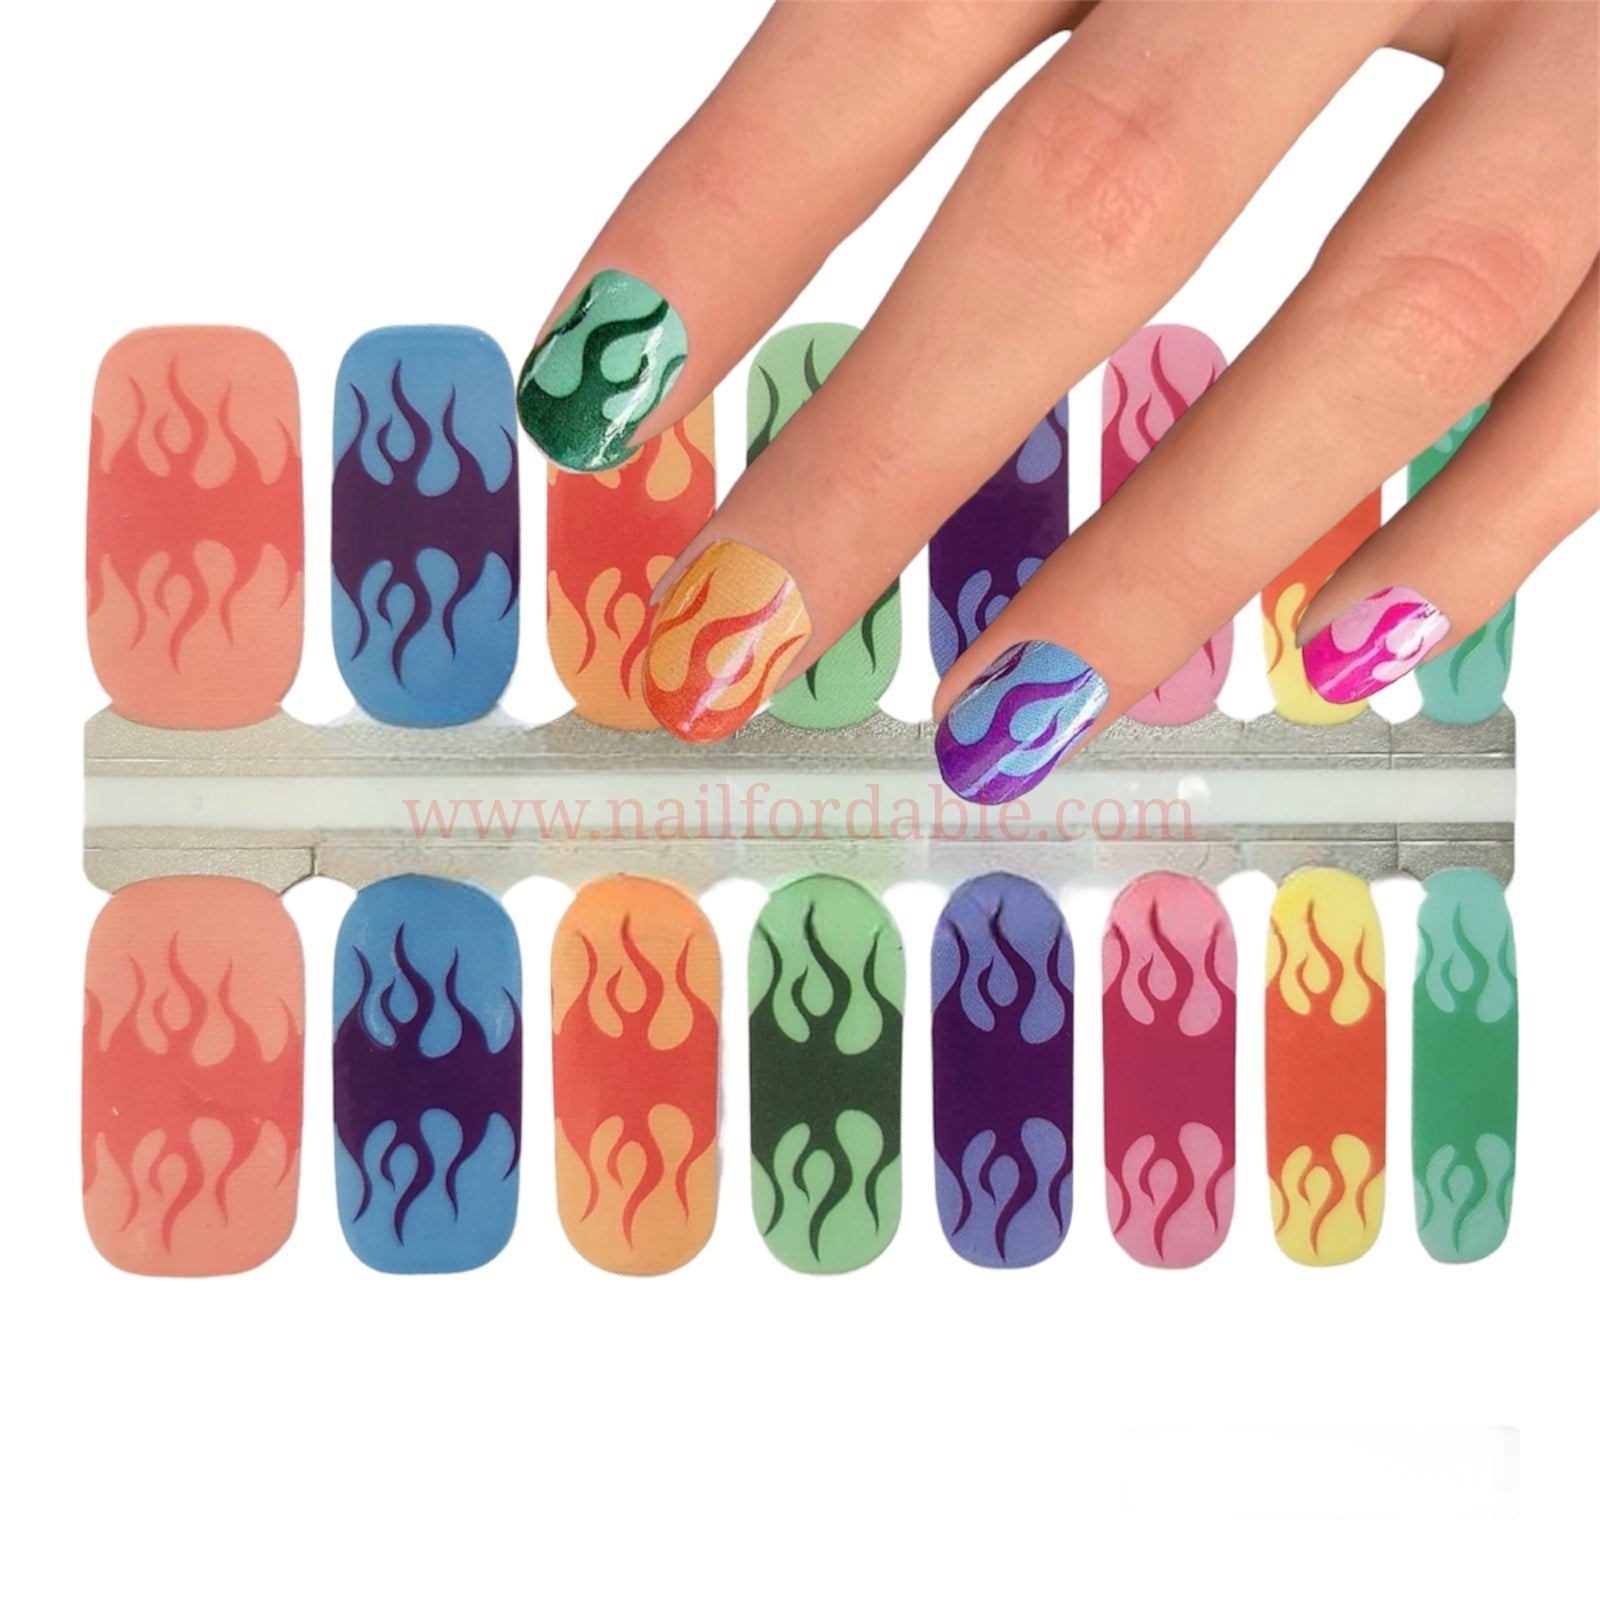 Fire of colors Nail Wraps | Semi Cured Gel Wraps | Gel Nail Wraps |Nail Polish | Nail Stickers